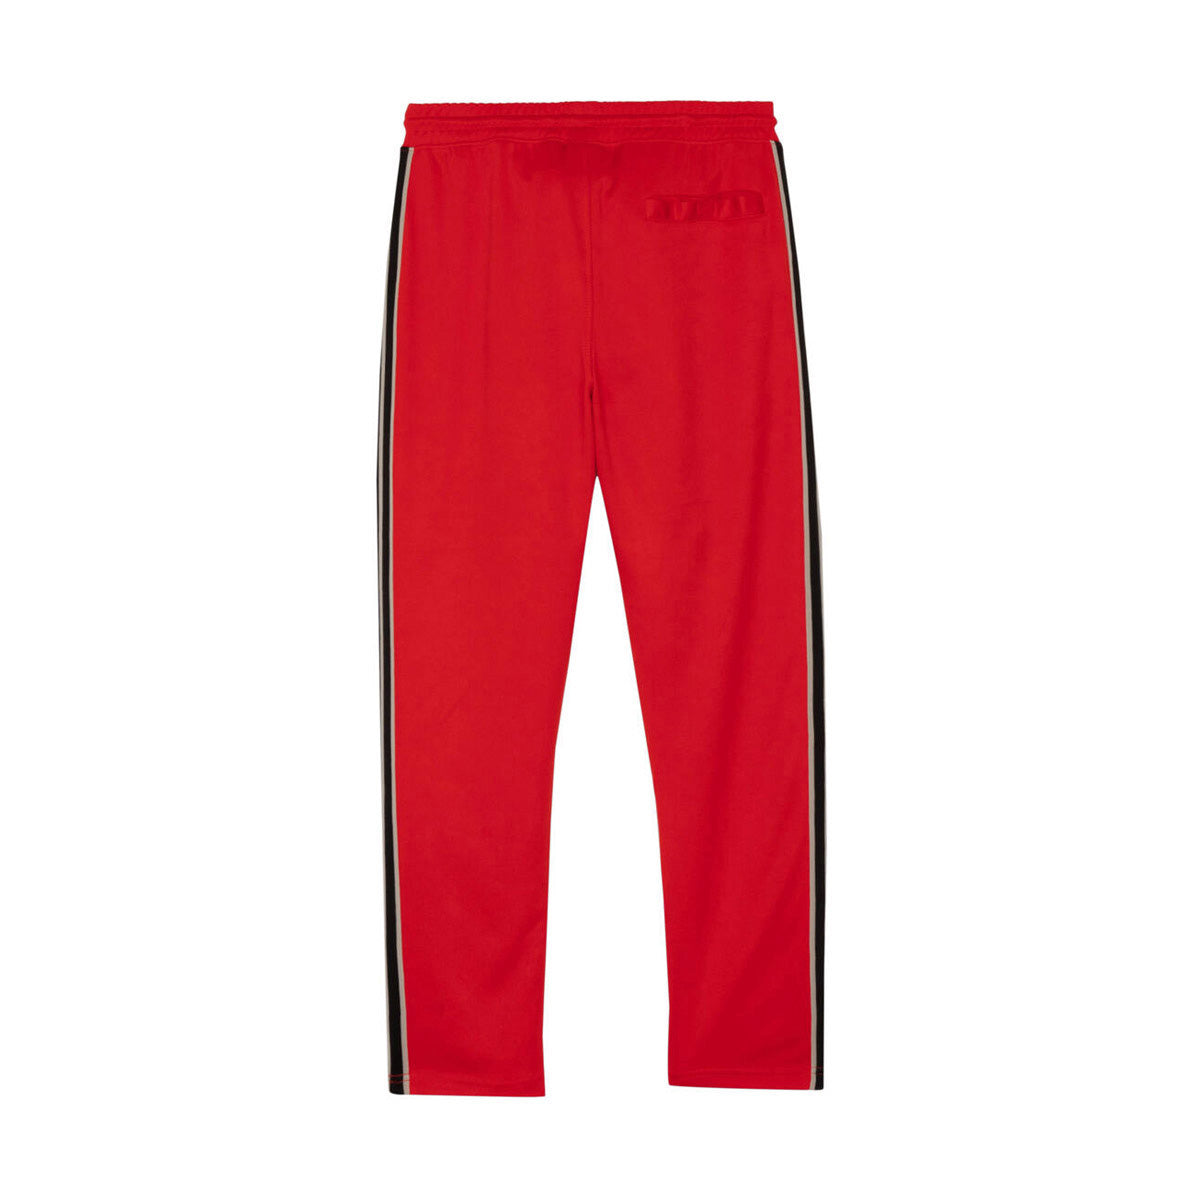 Prestige Track Red Pants